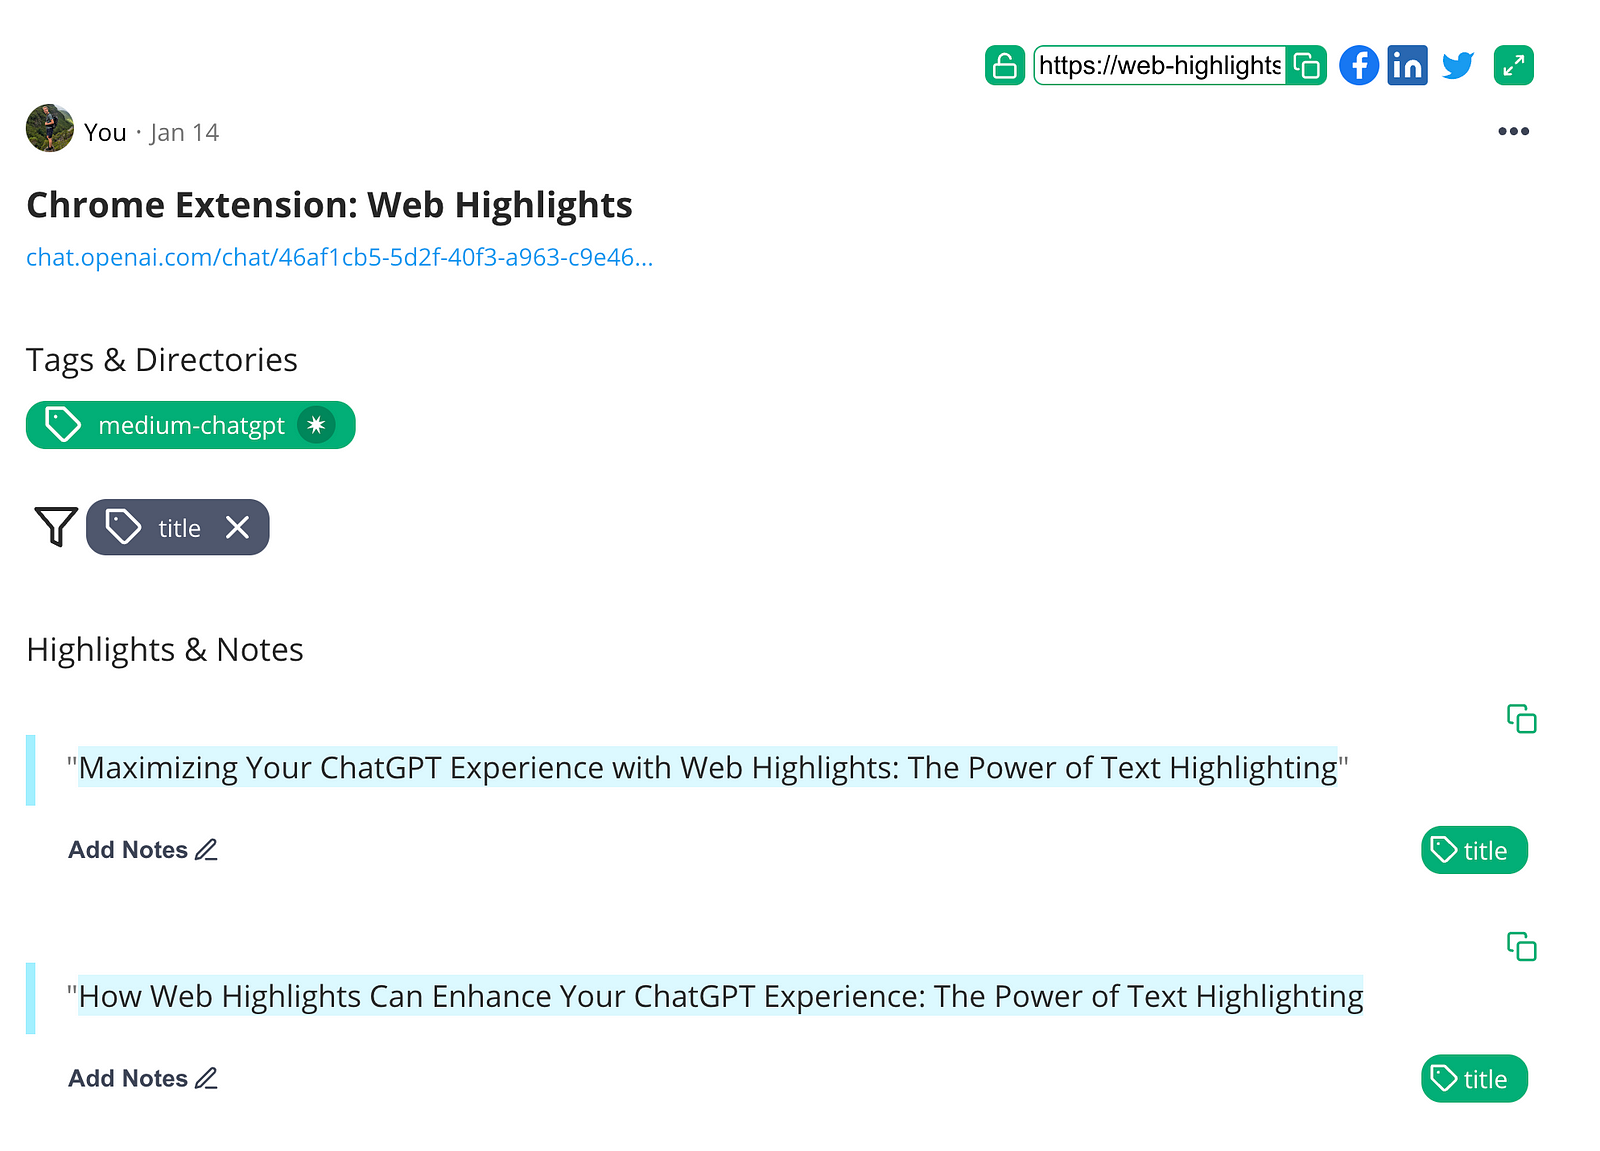 Web Highlights app: Filtering highlights by tag